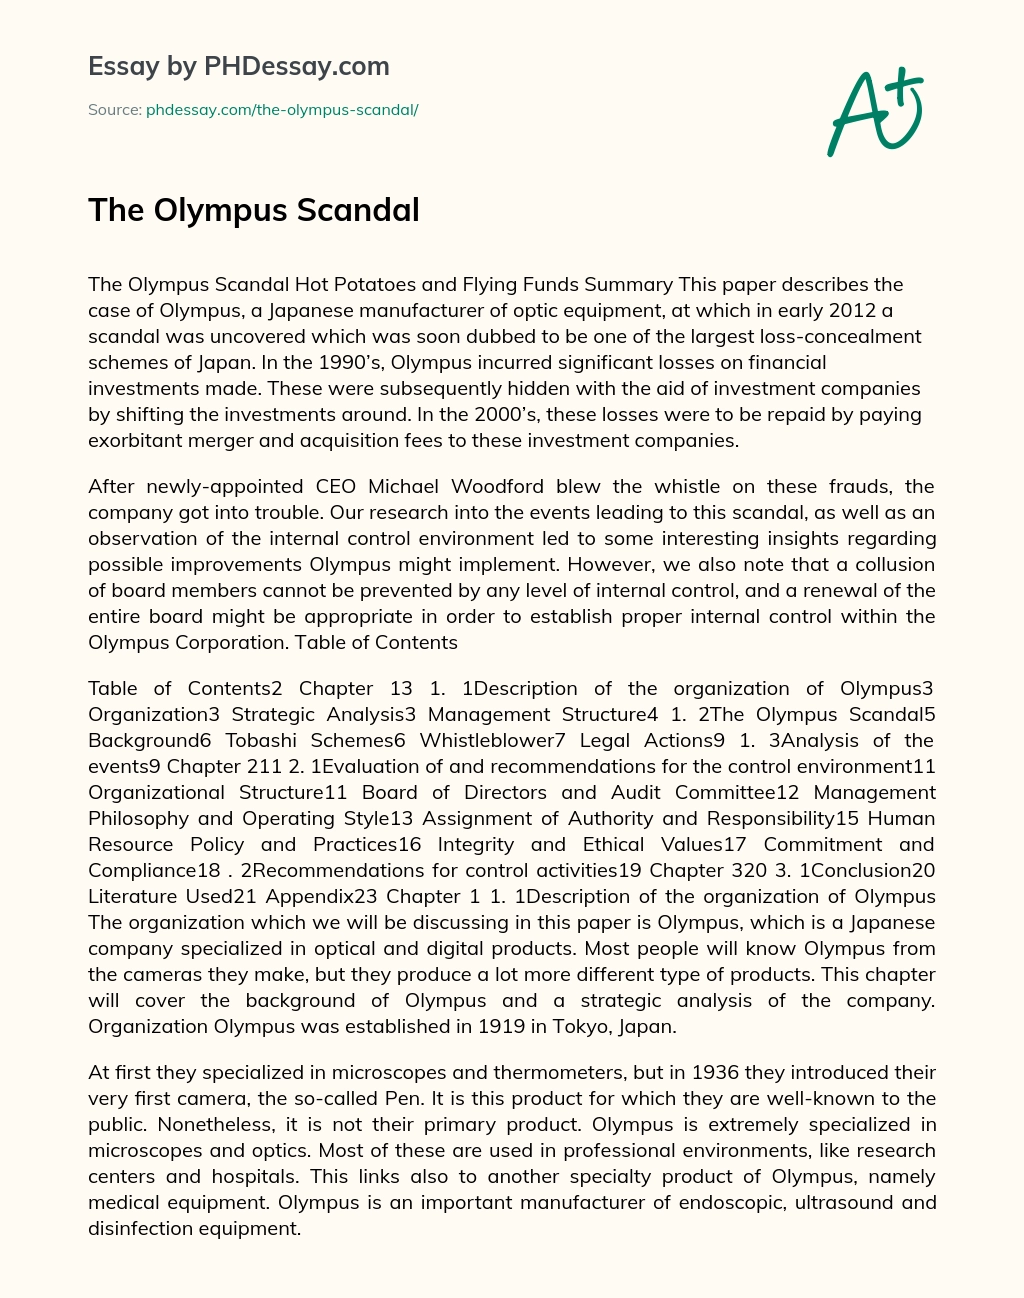 The Olympus Scandal essay